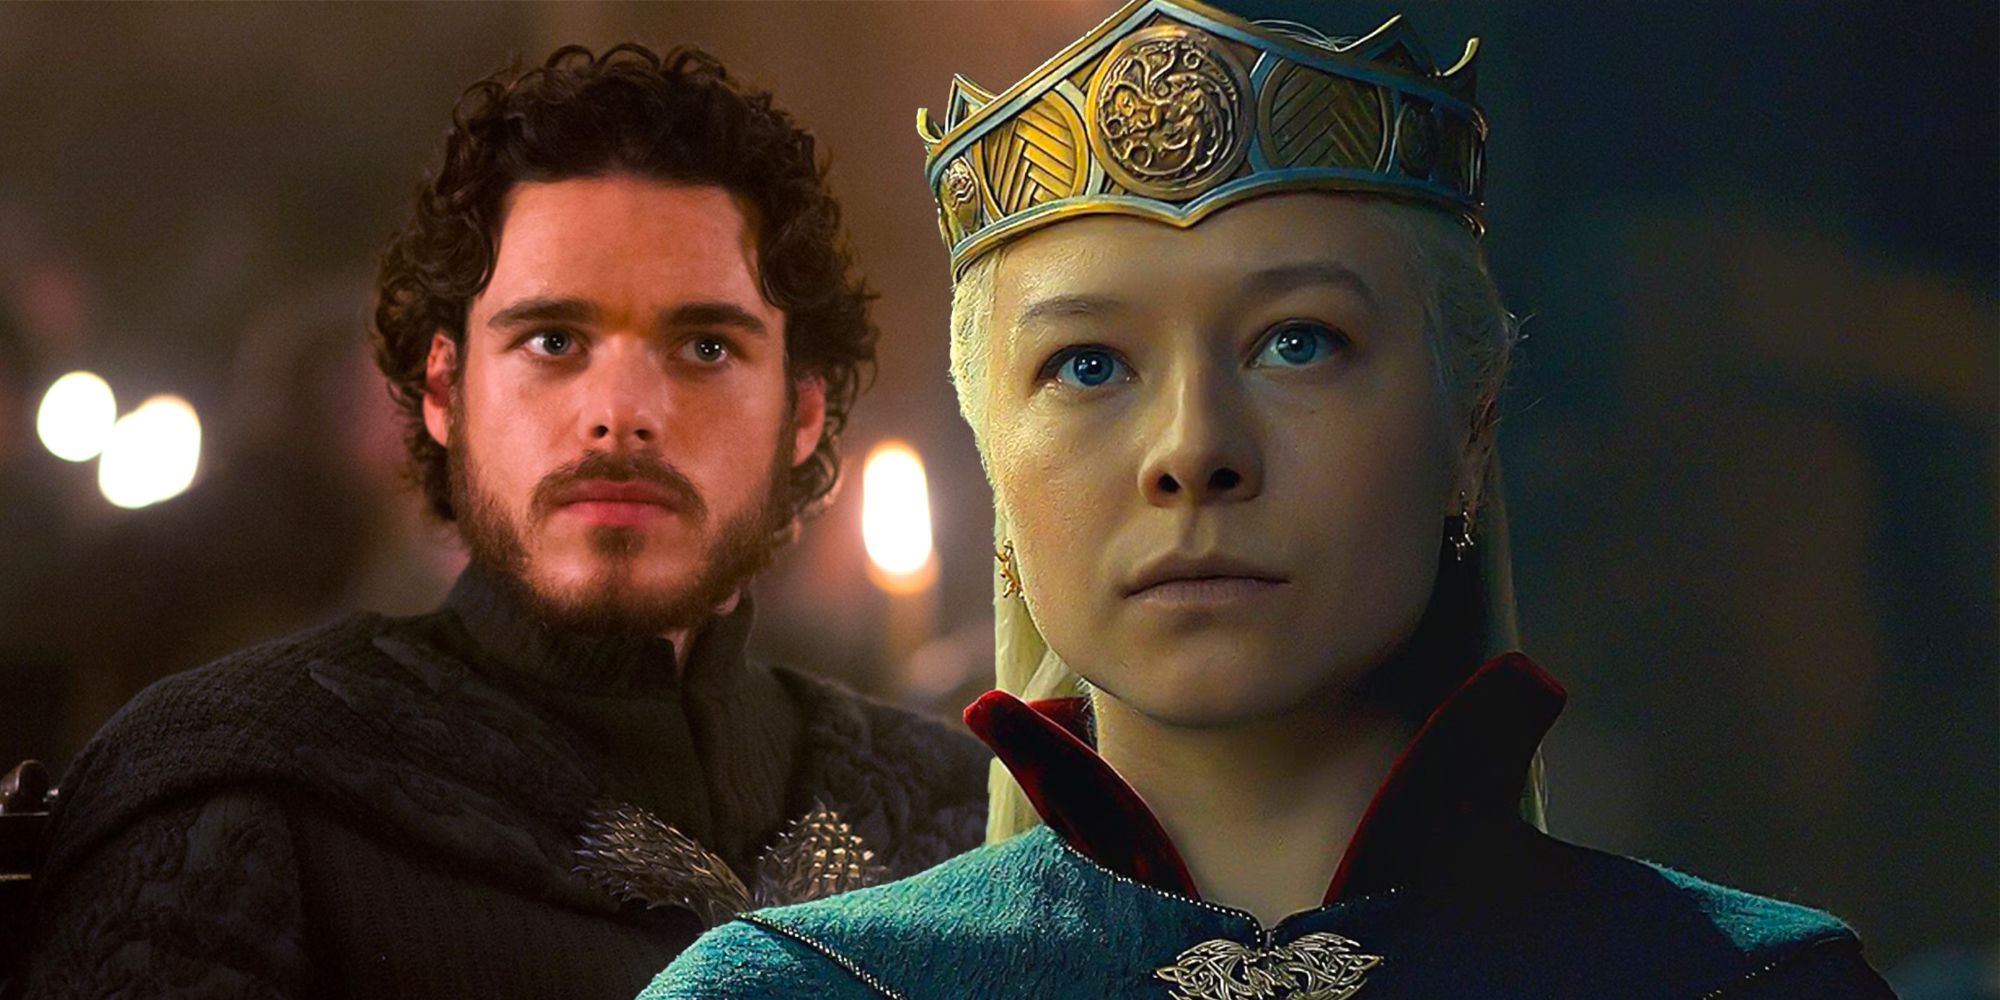 Robb Stark at the Red Wedding in GOT with Rhaenyra Targaryen wearing her crown in HOTD